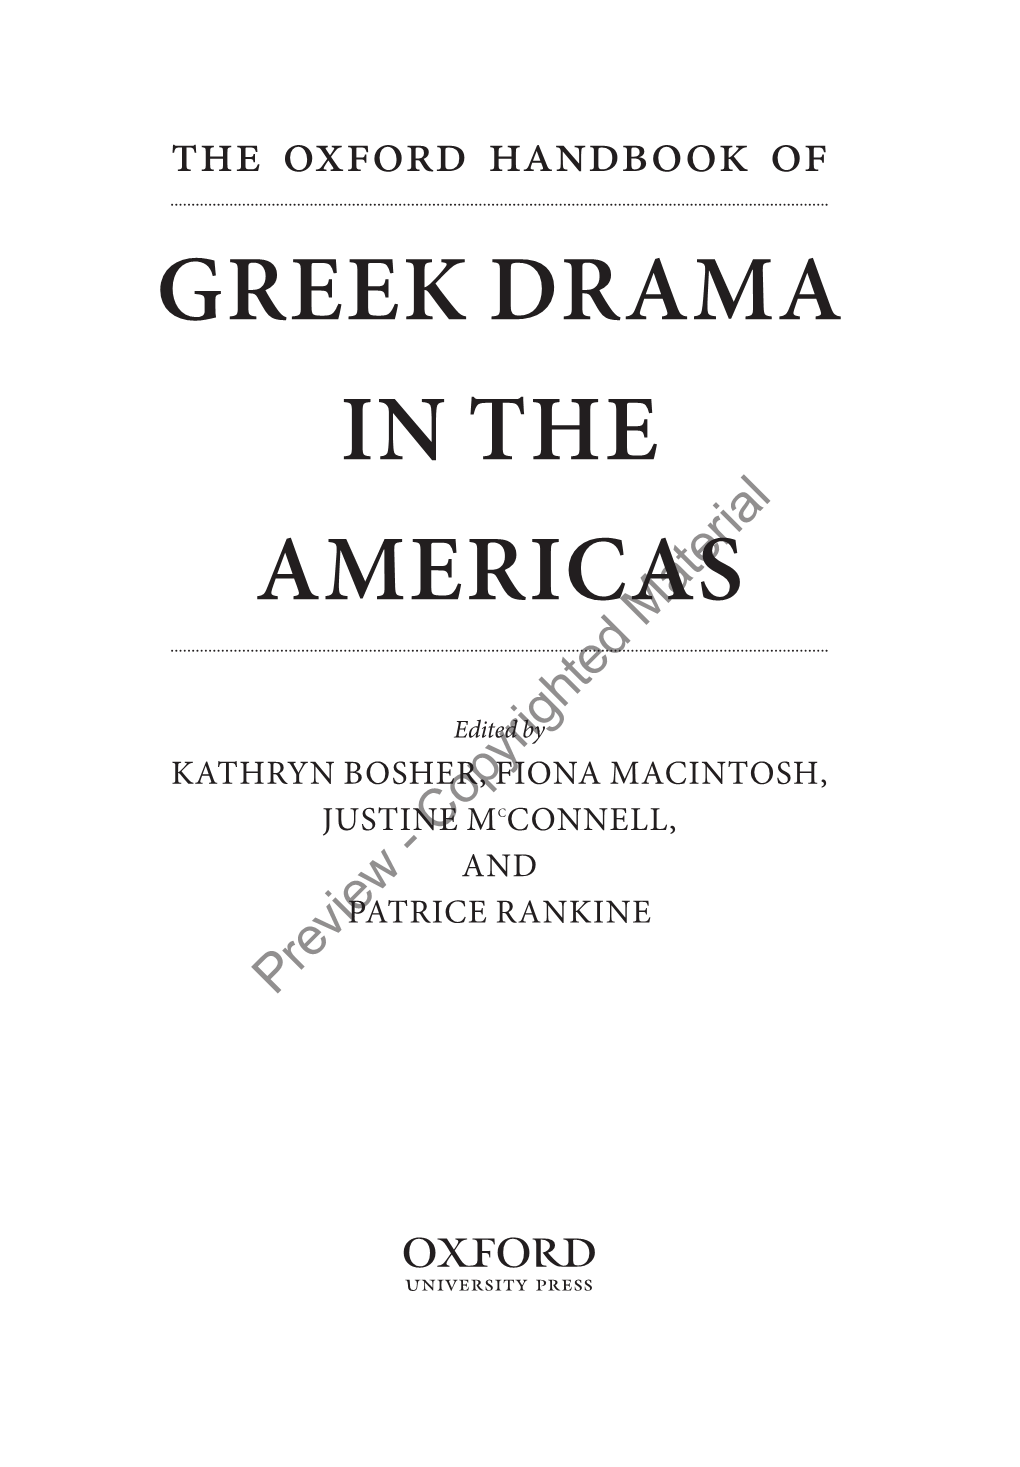 The Oxford Handbook of GREEK DRAMA in the AMERICAS